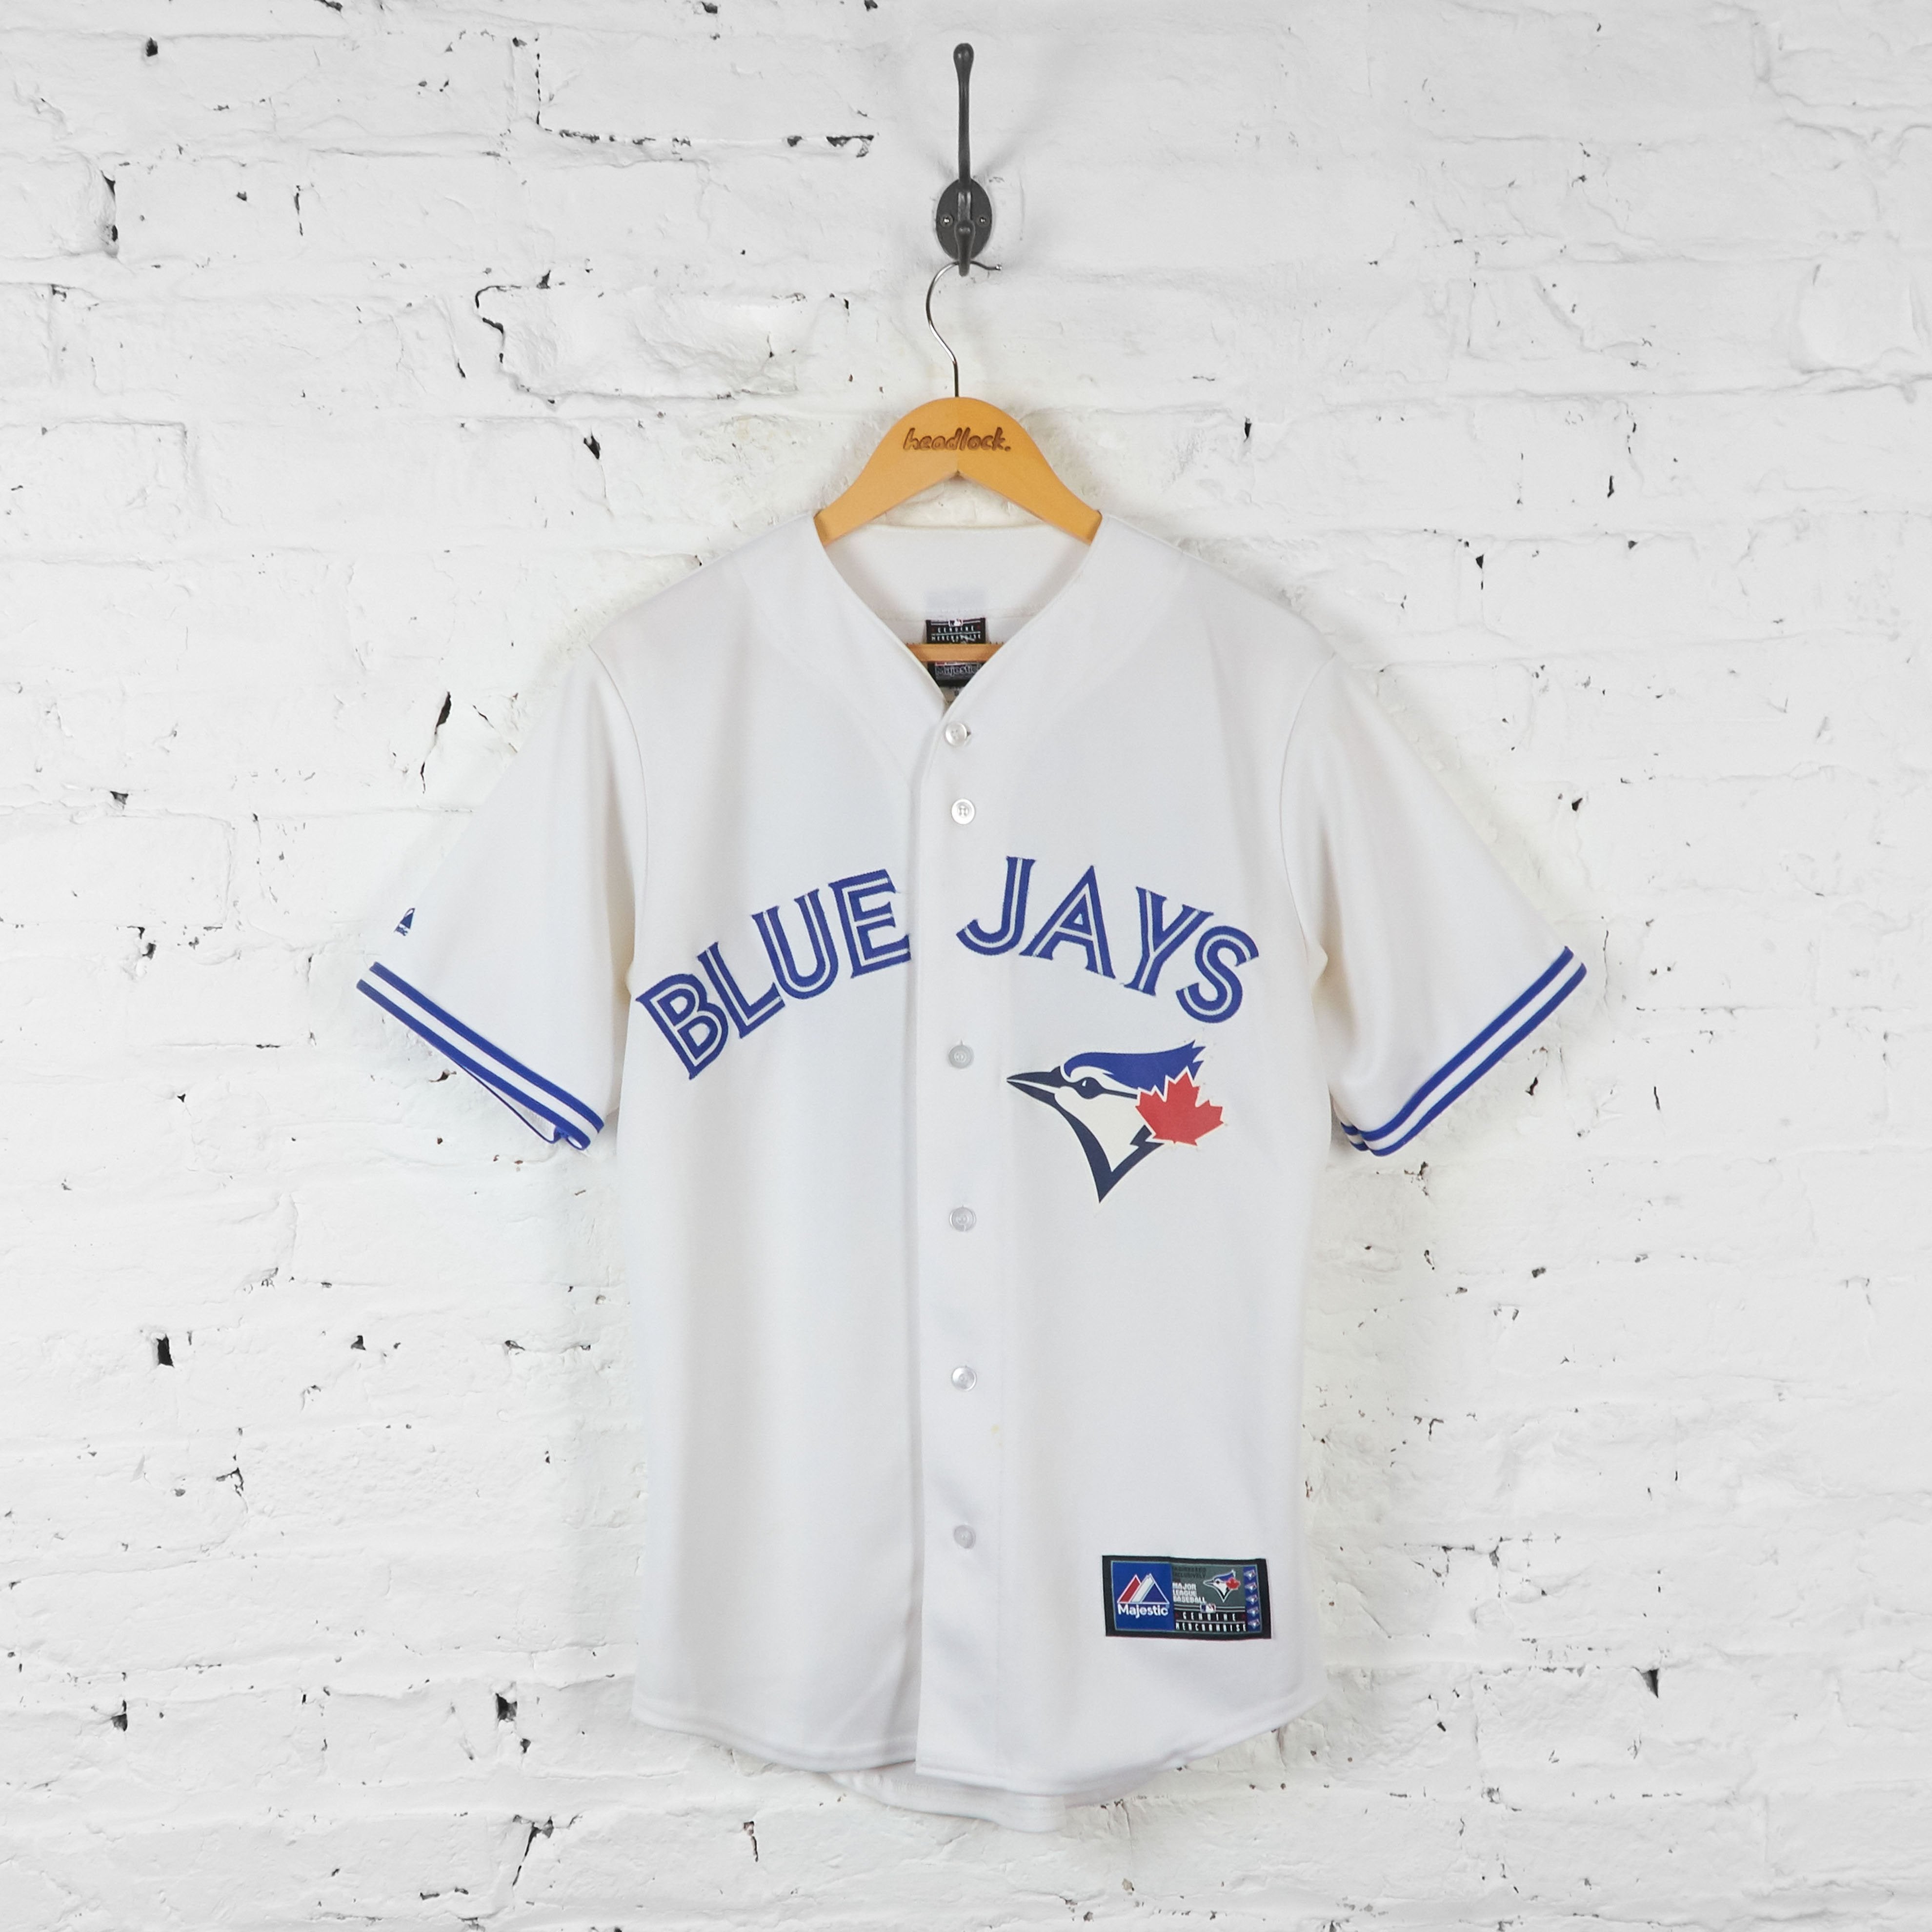 Toronto Blue Jays gear